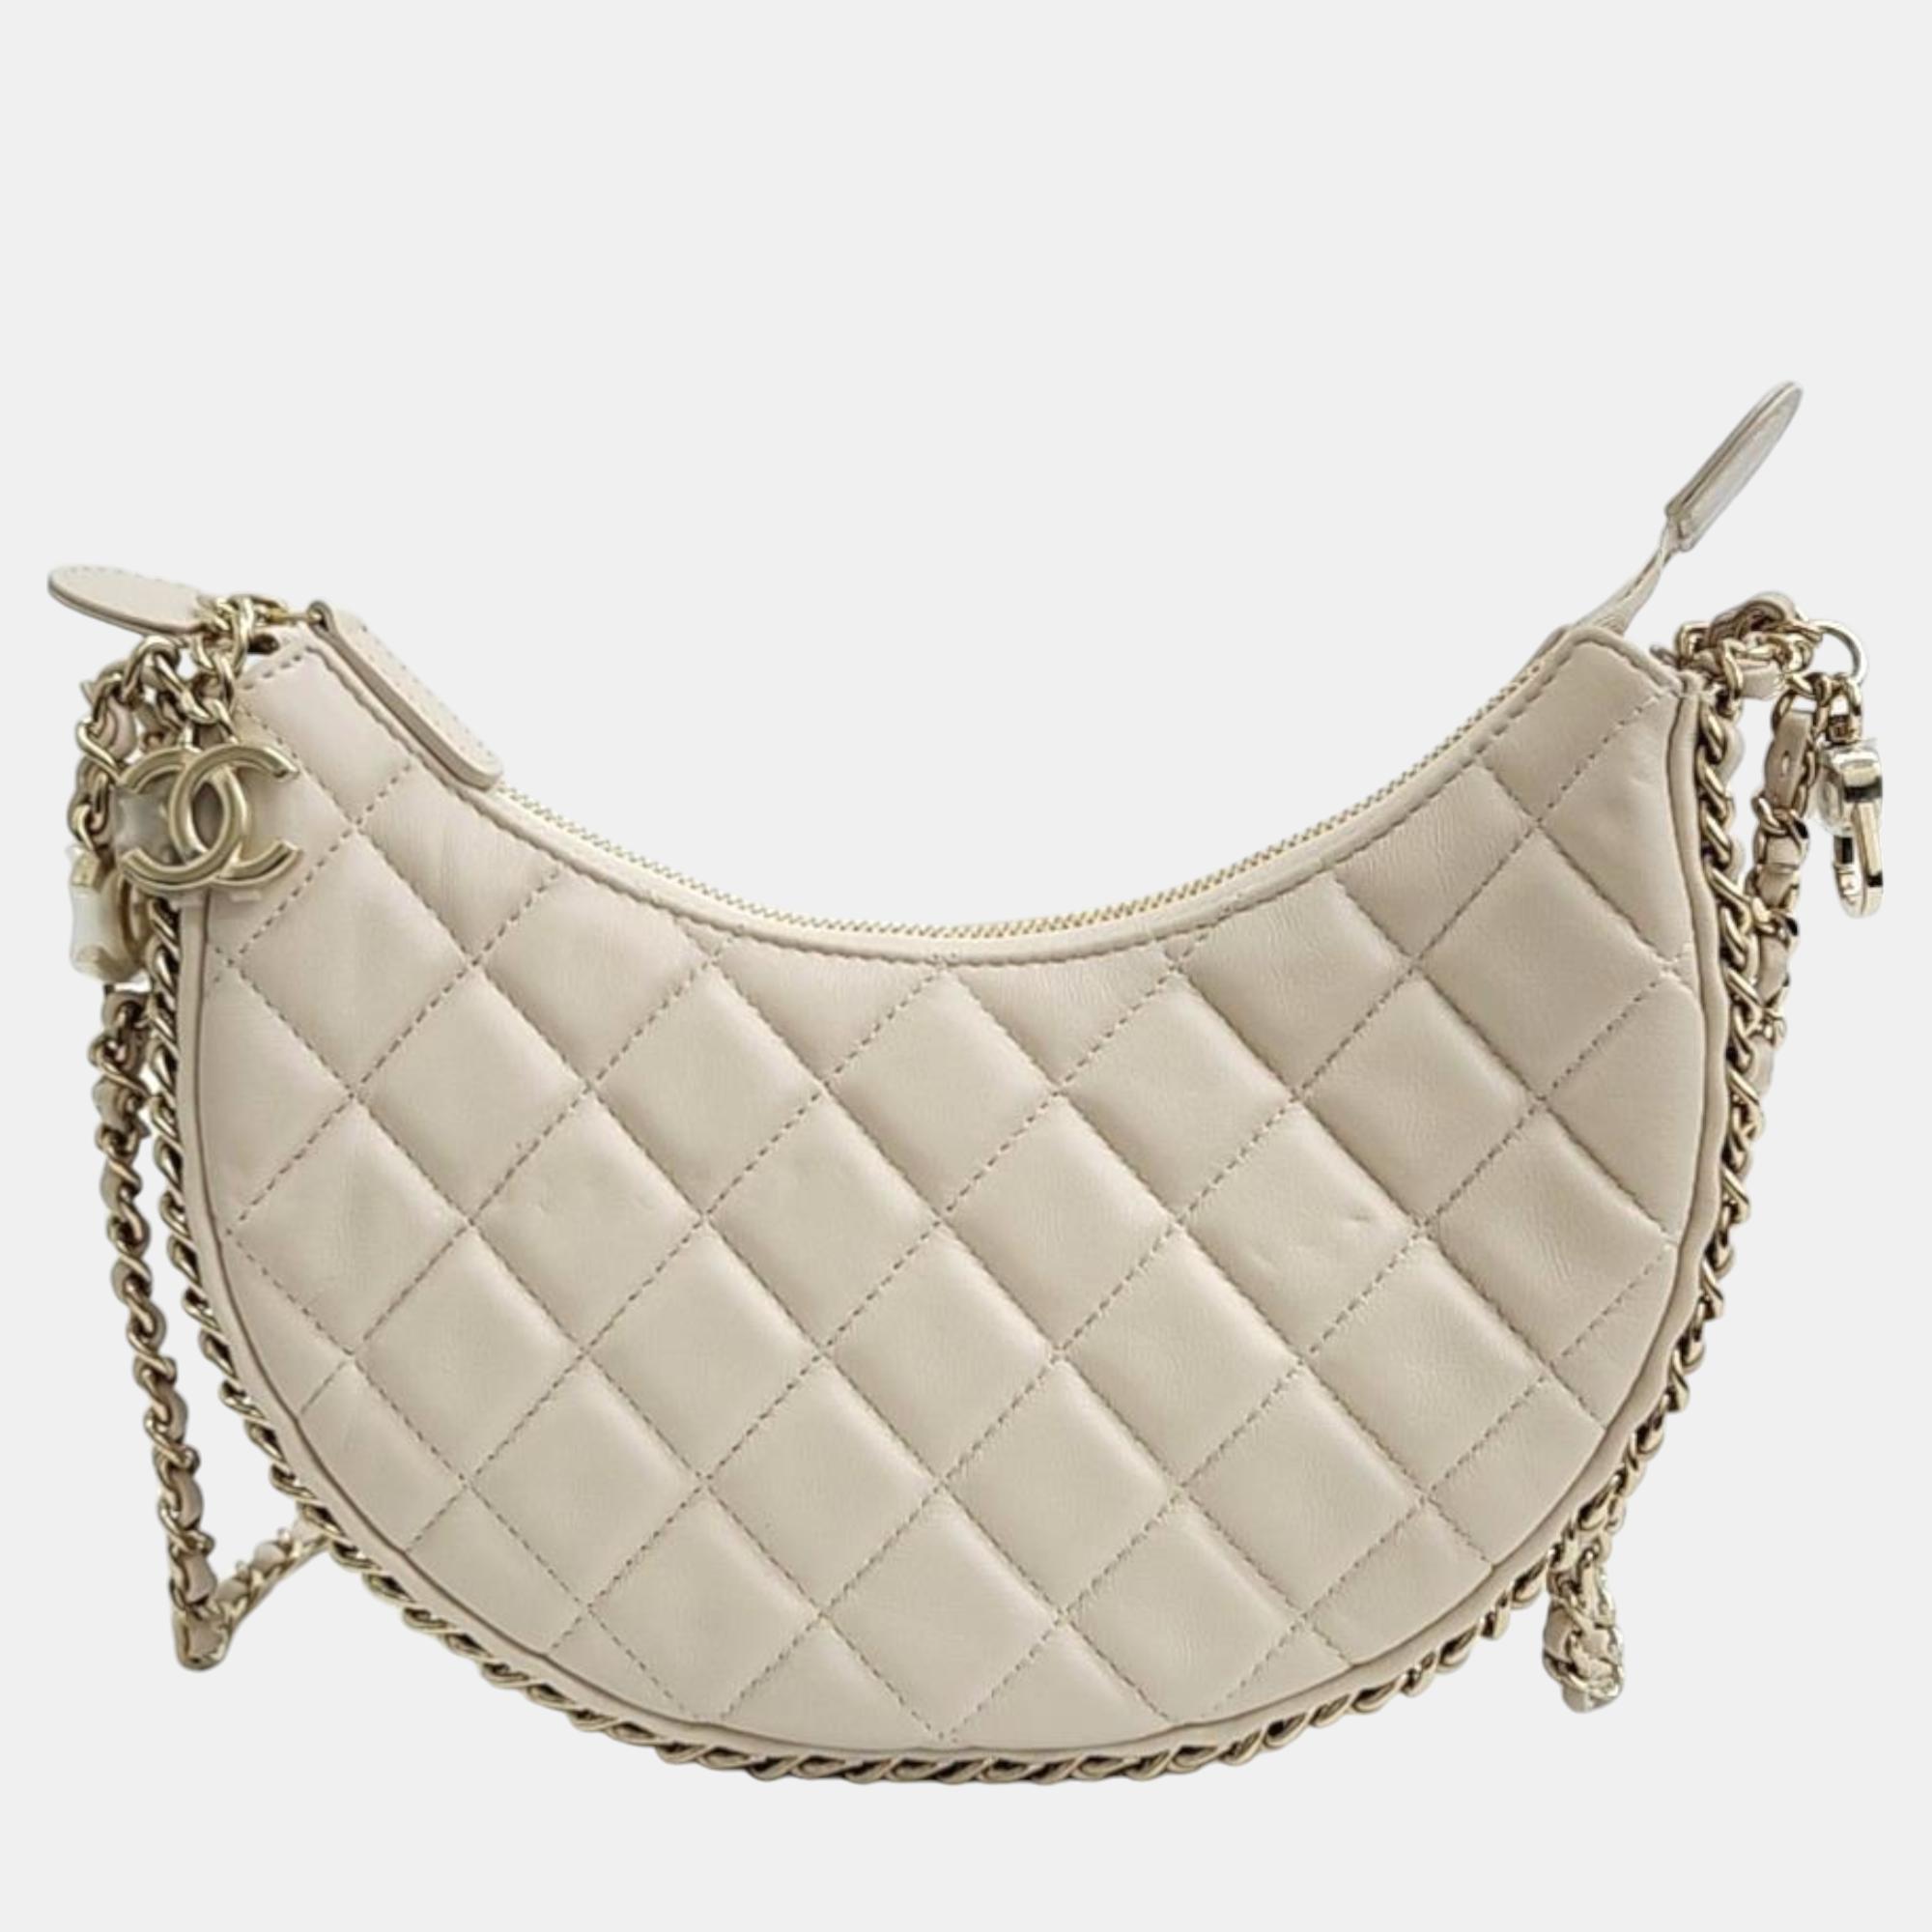 Chanel beige leather small hobo bag